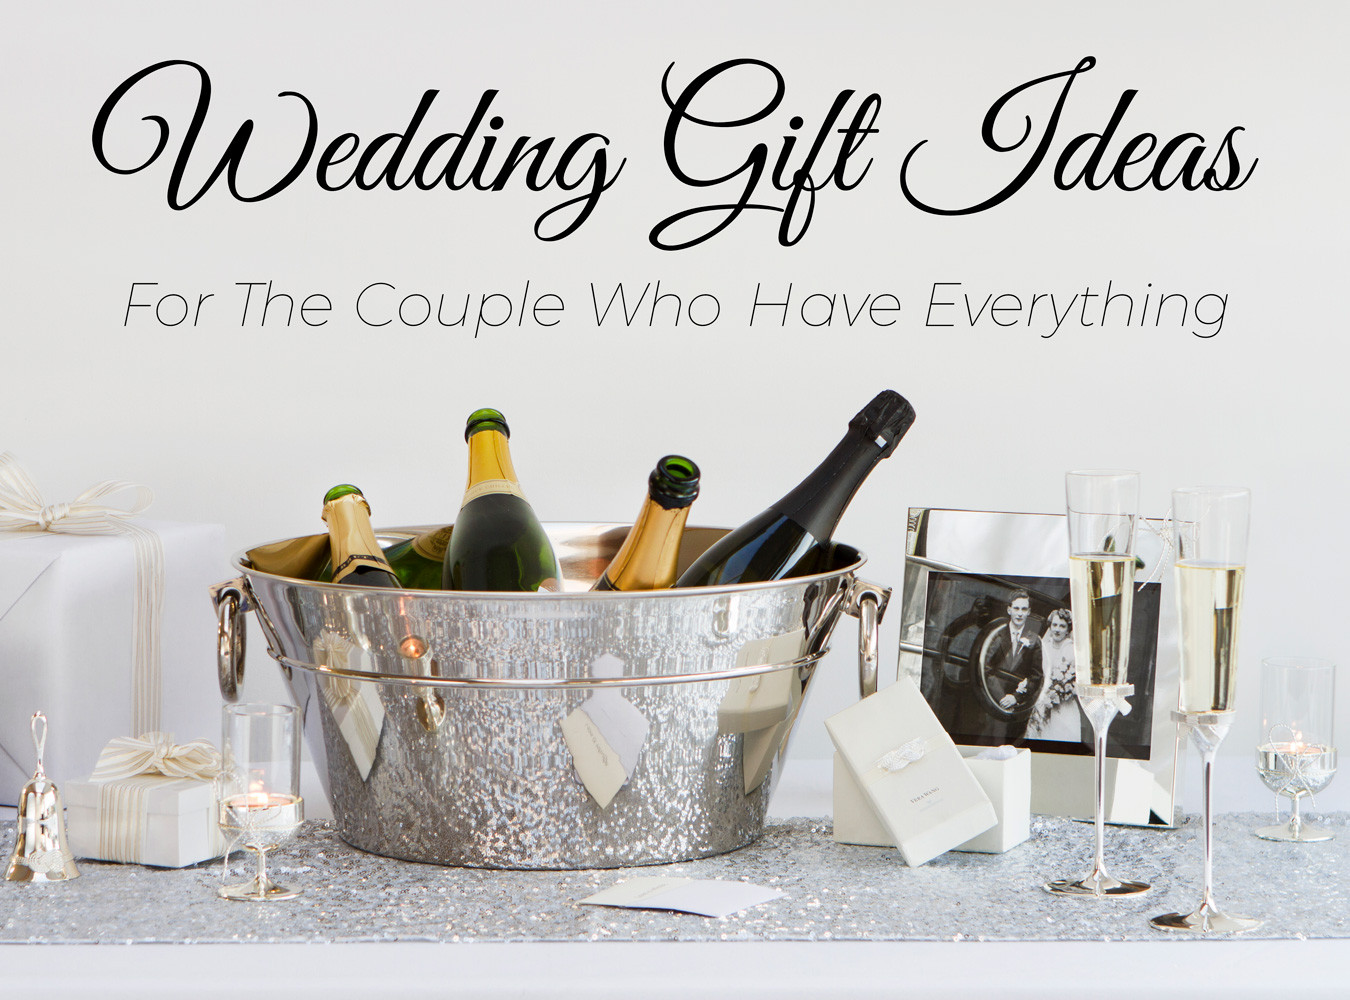 Wedding Gift Ideas For Young Couple
 5 Wedding Gift Ideas for the Couple Who Have Everything